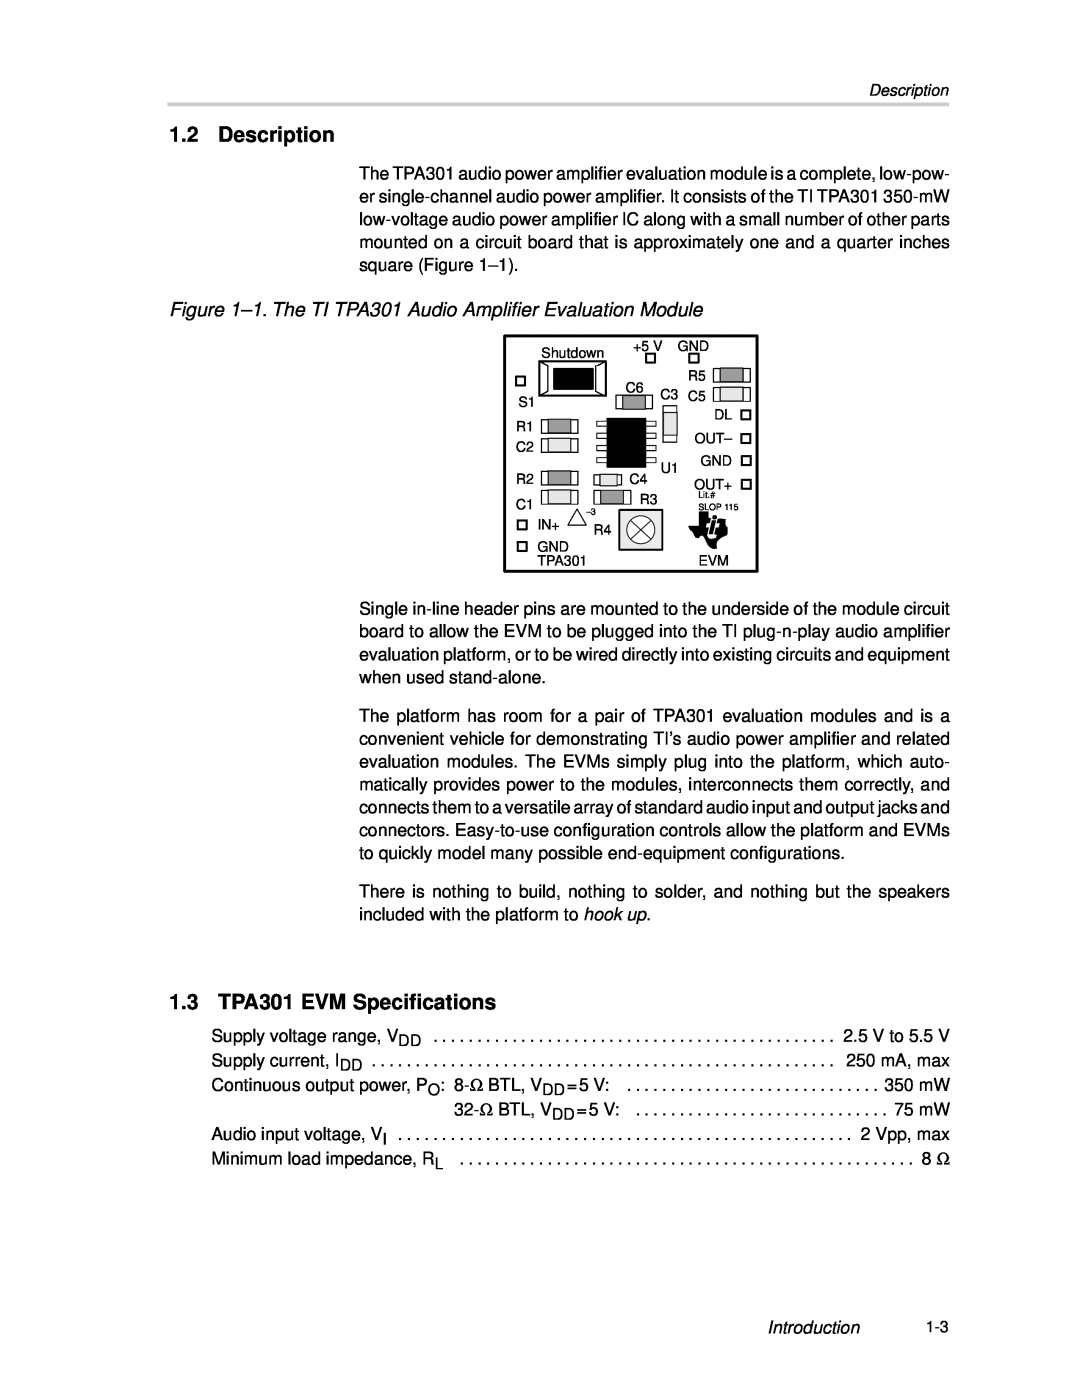 Texas Instruments manual Description, 1.3 TPA301 EVM Specifications, Introduction 